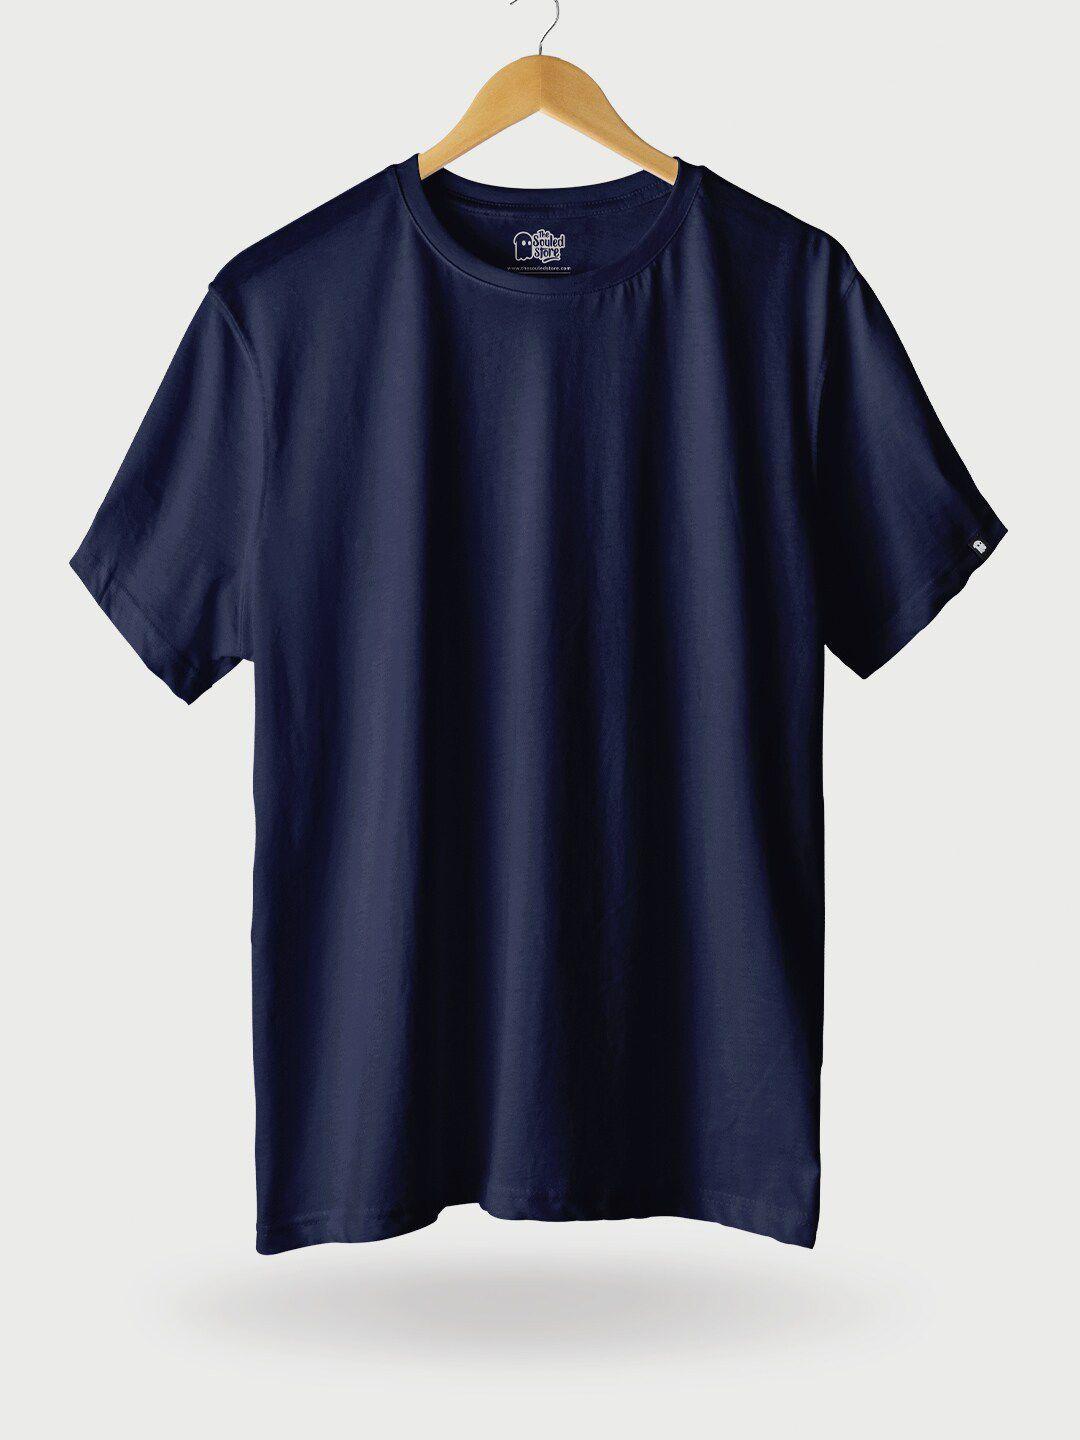 the souled store men navy blue t-shirt